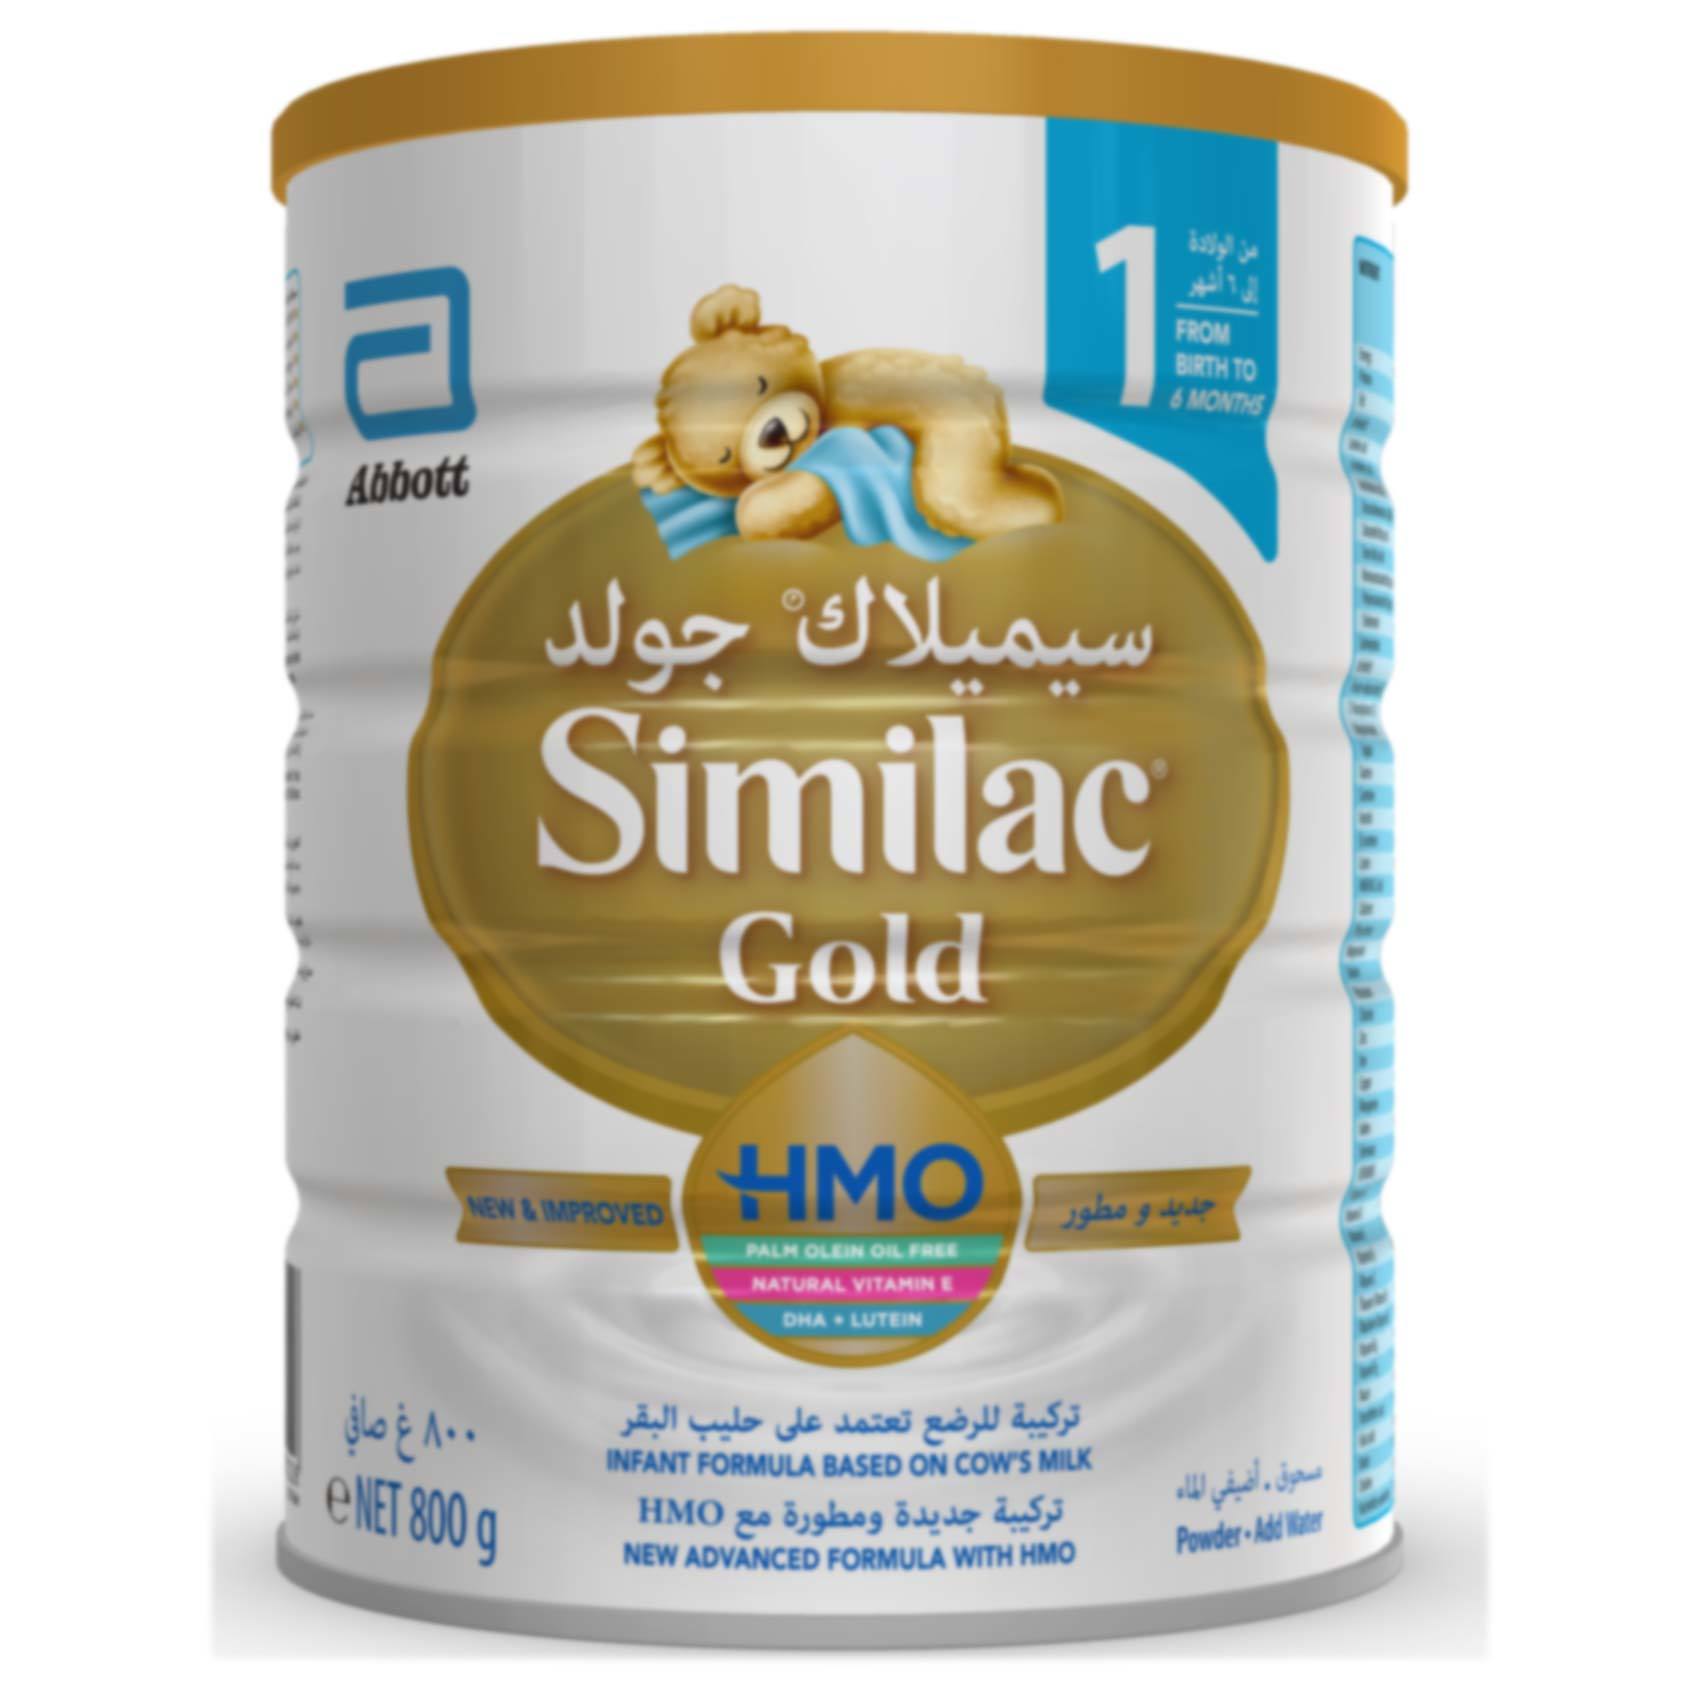 Buy Similac Gold 1 Hmo Infant Formula Milk Powder 800g Online Shop Baby Products On Carrefour Uae